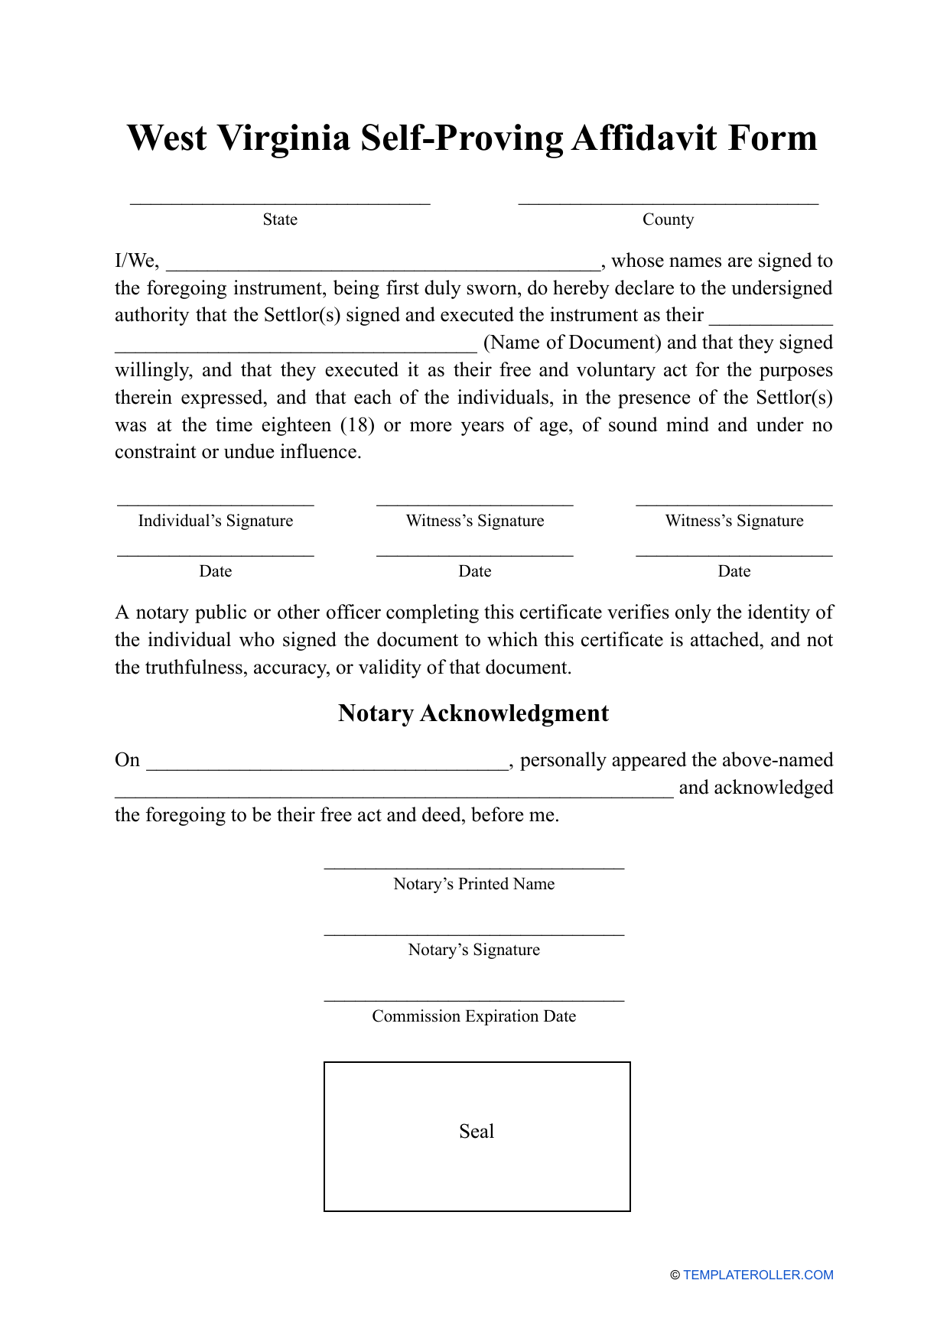 Self-proving Affidavit Form - West Virginia, Page 1